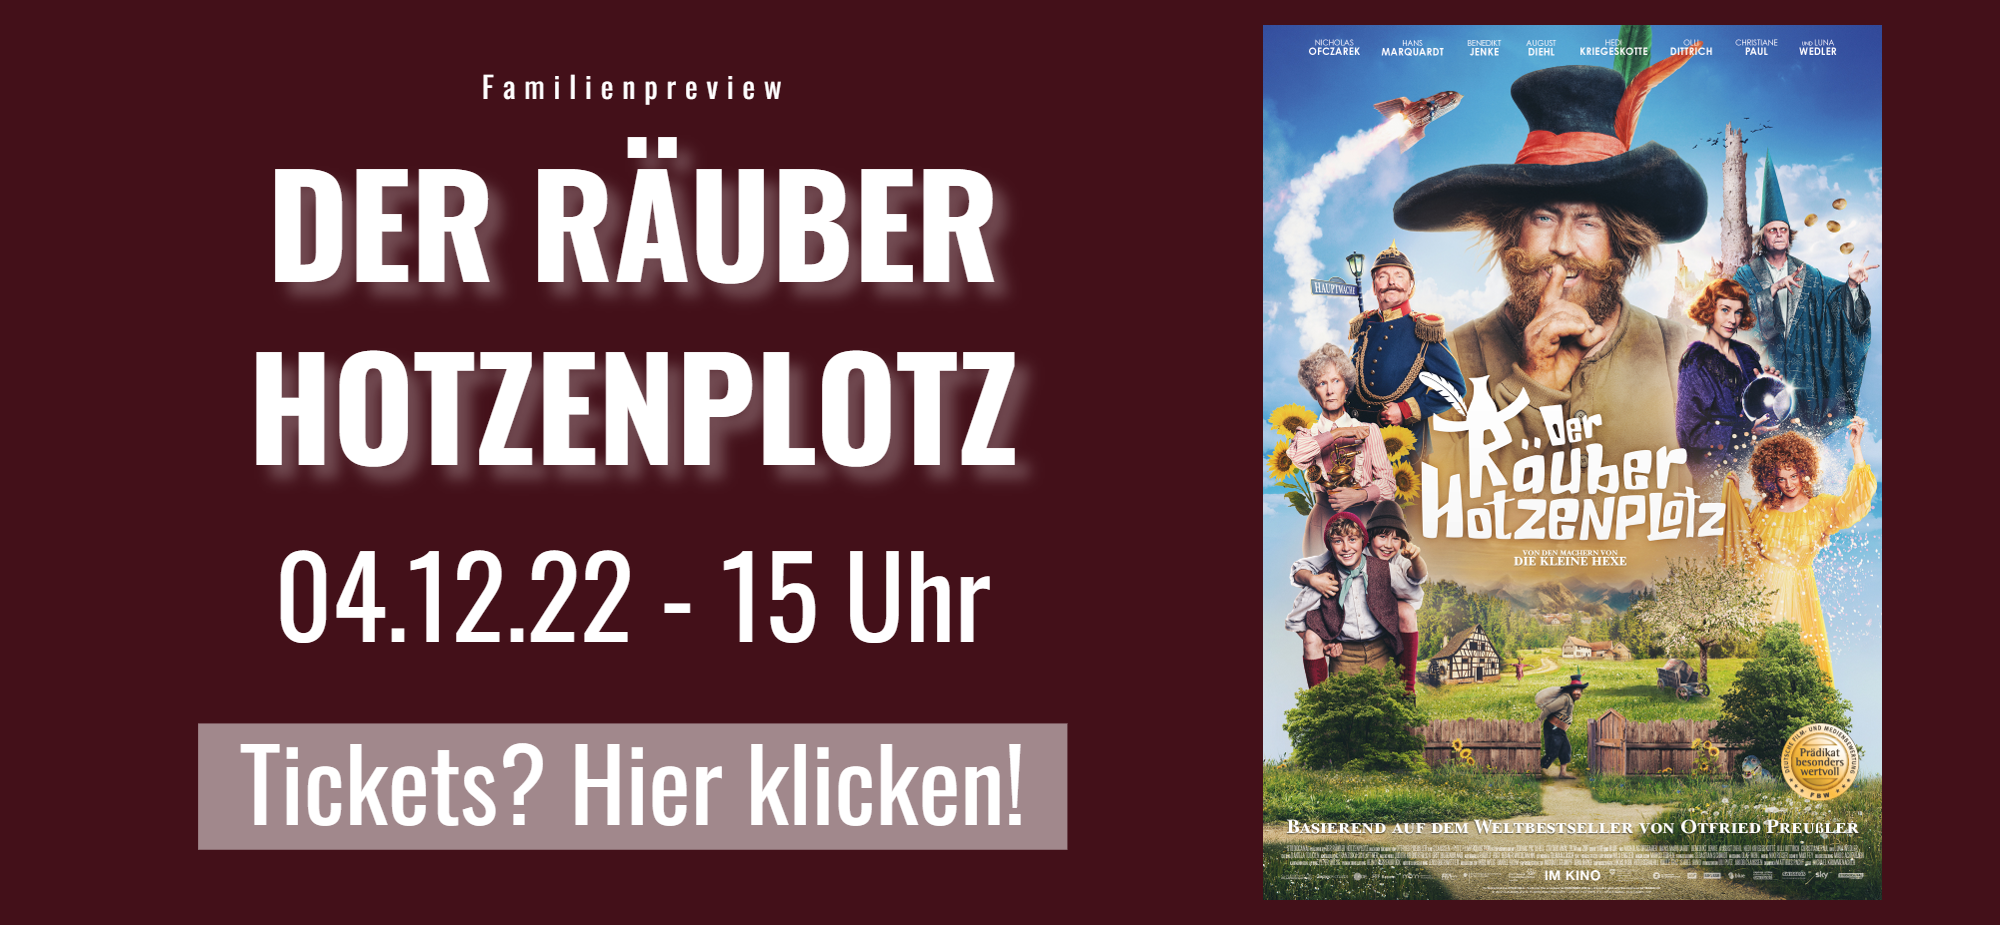 Familienpreview: Der Räuber Hotzenplotz - 04.12.22 - 15 Uhr